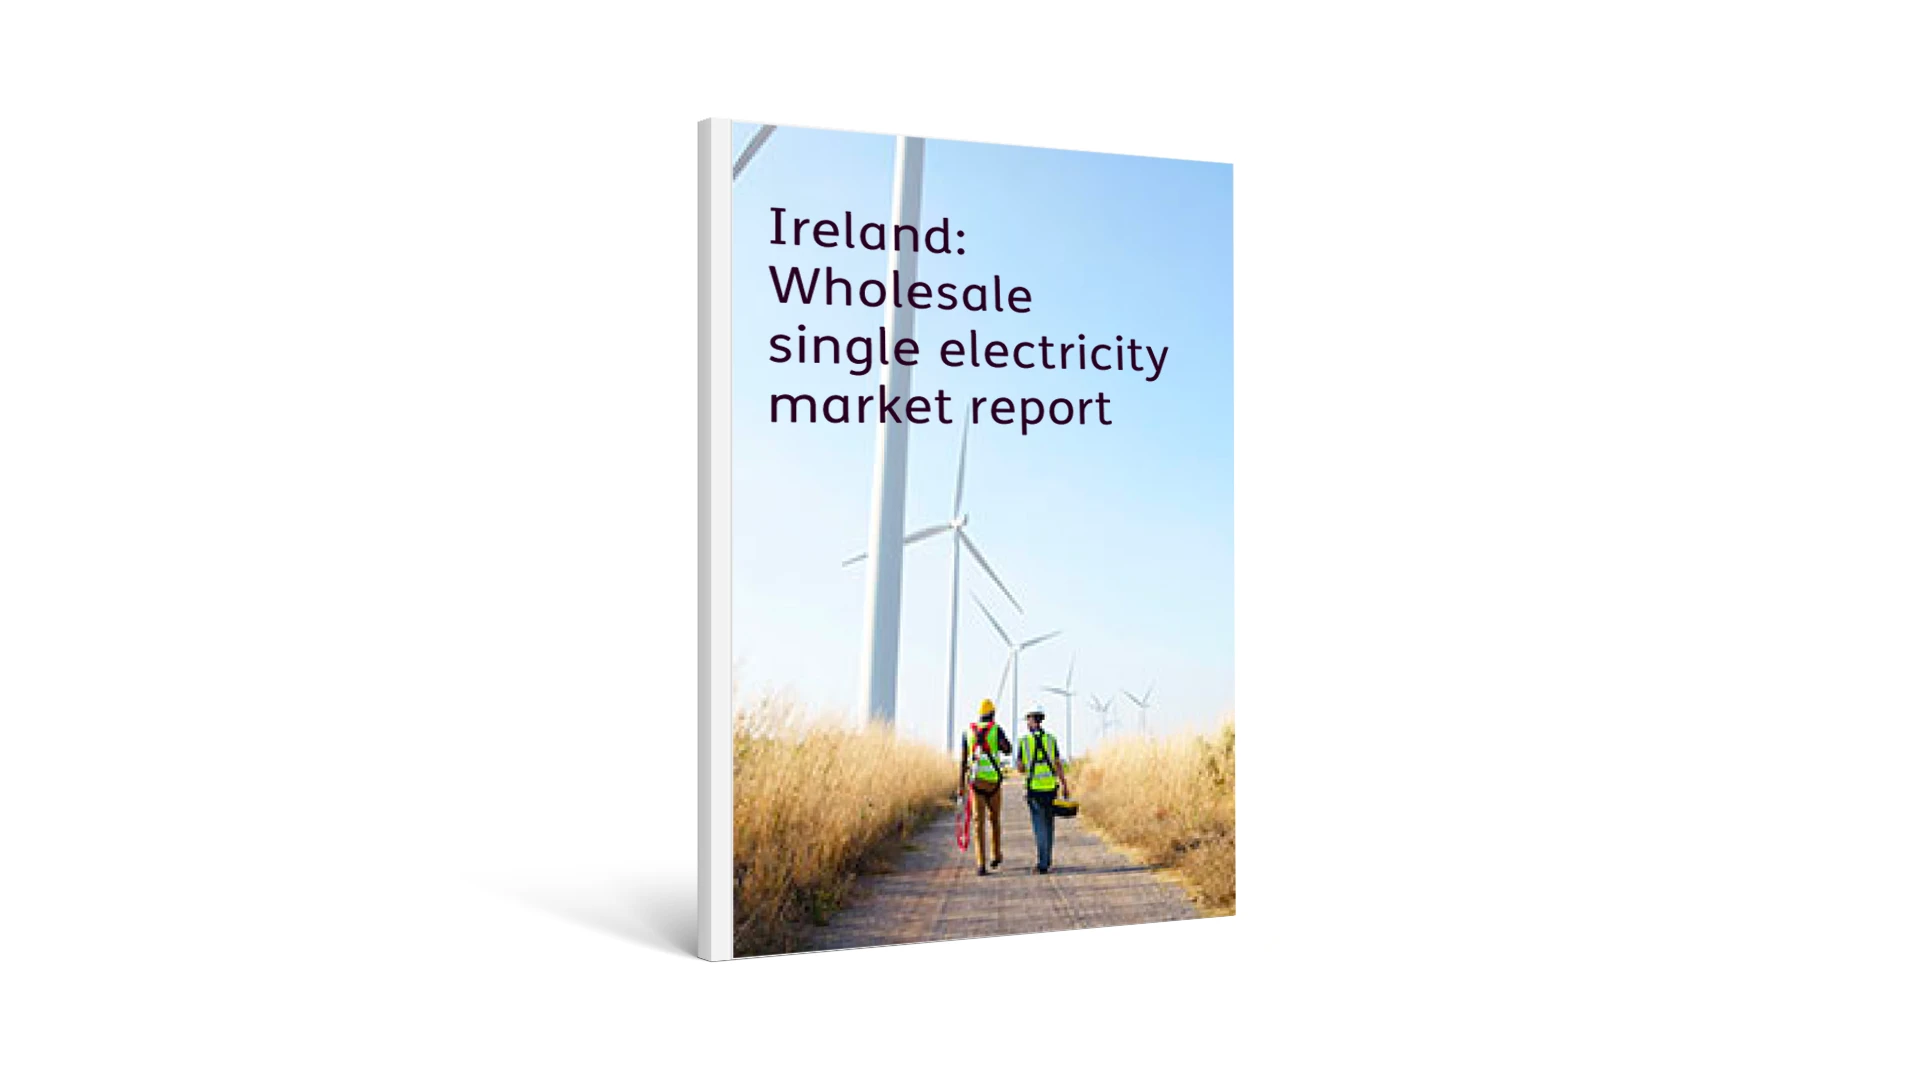 Ireland: Wholesale single electricity market report